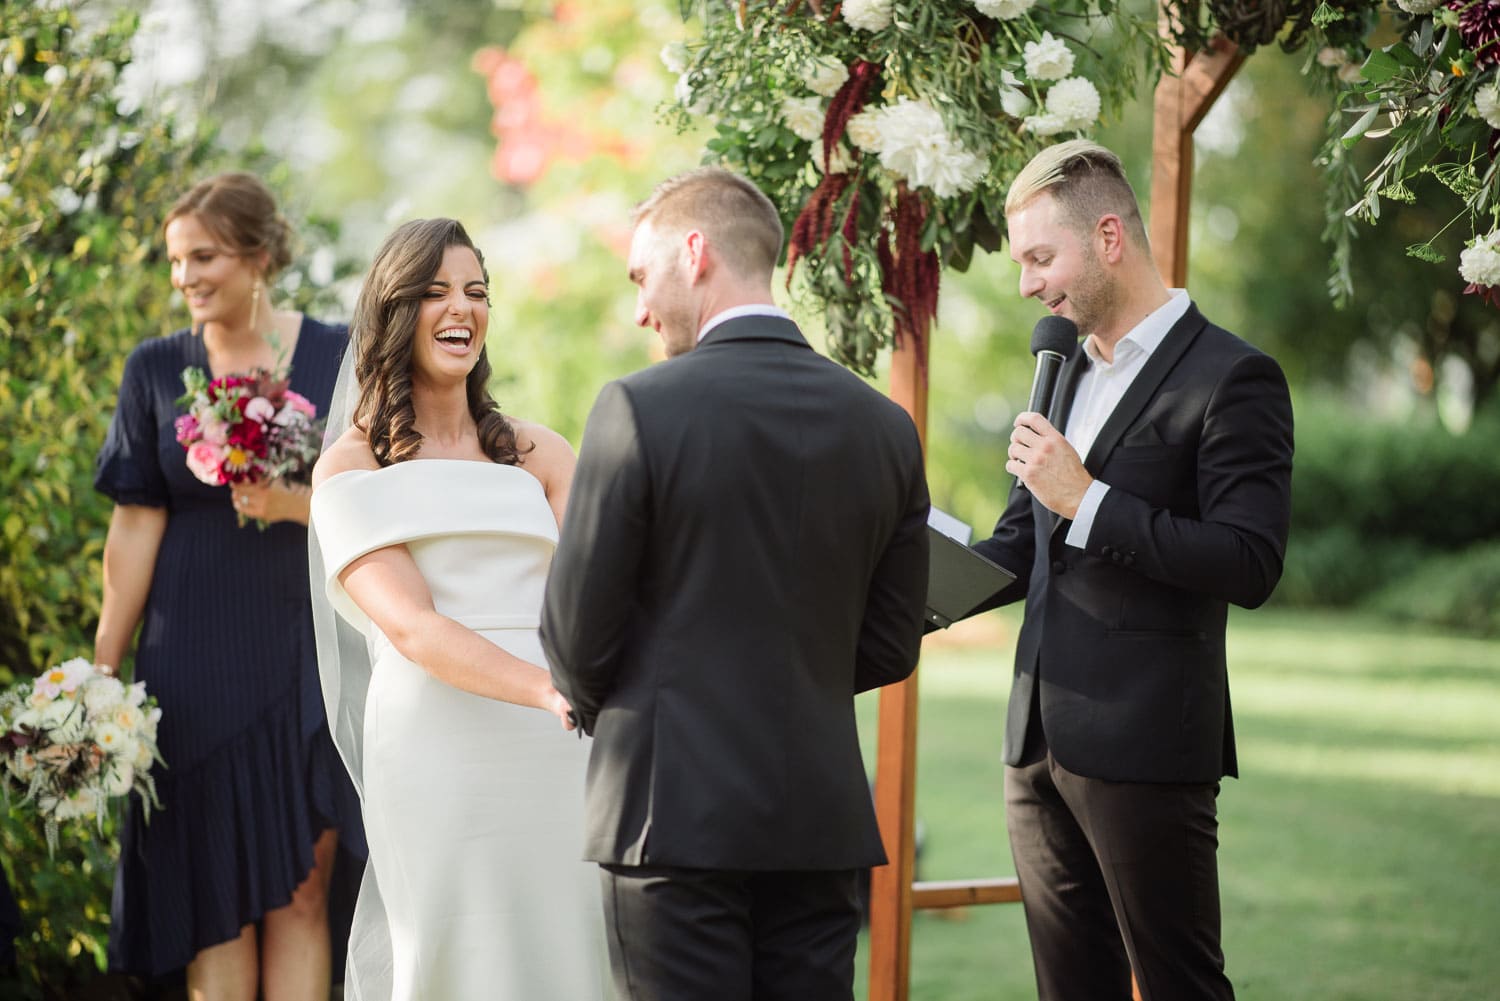 Laughing bride during a backyard wedding